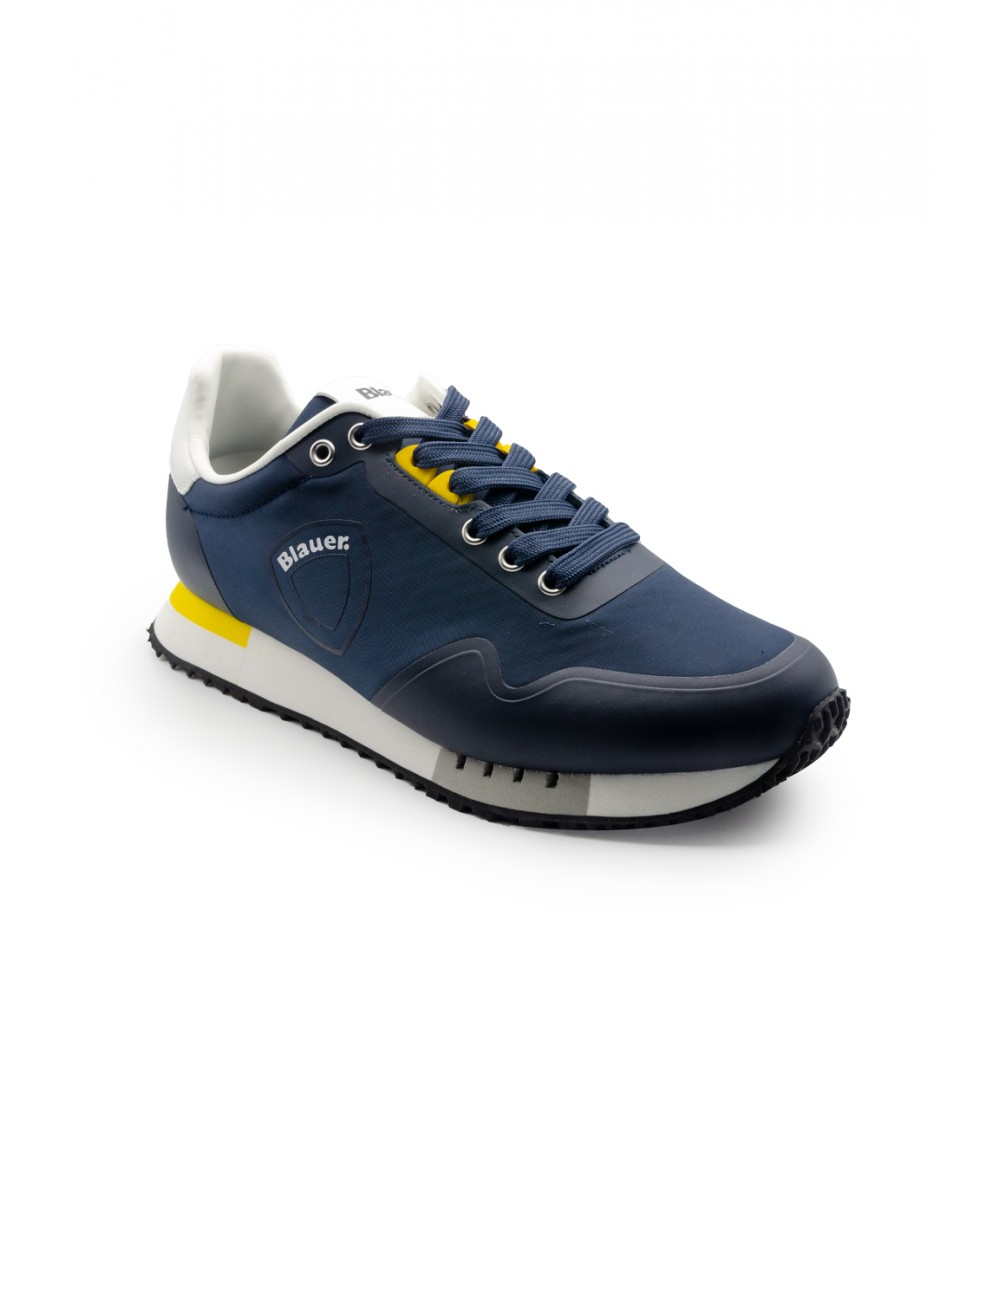 scarpe blauer UOMO NVY NAVY - S4DEXTER01/RIP DEXTER01 vista laterale